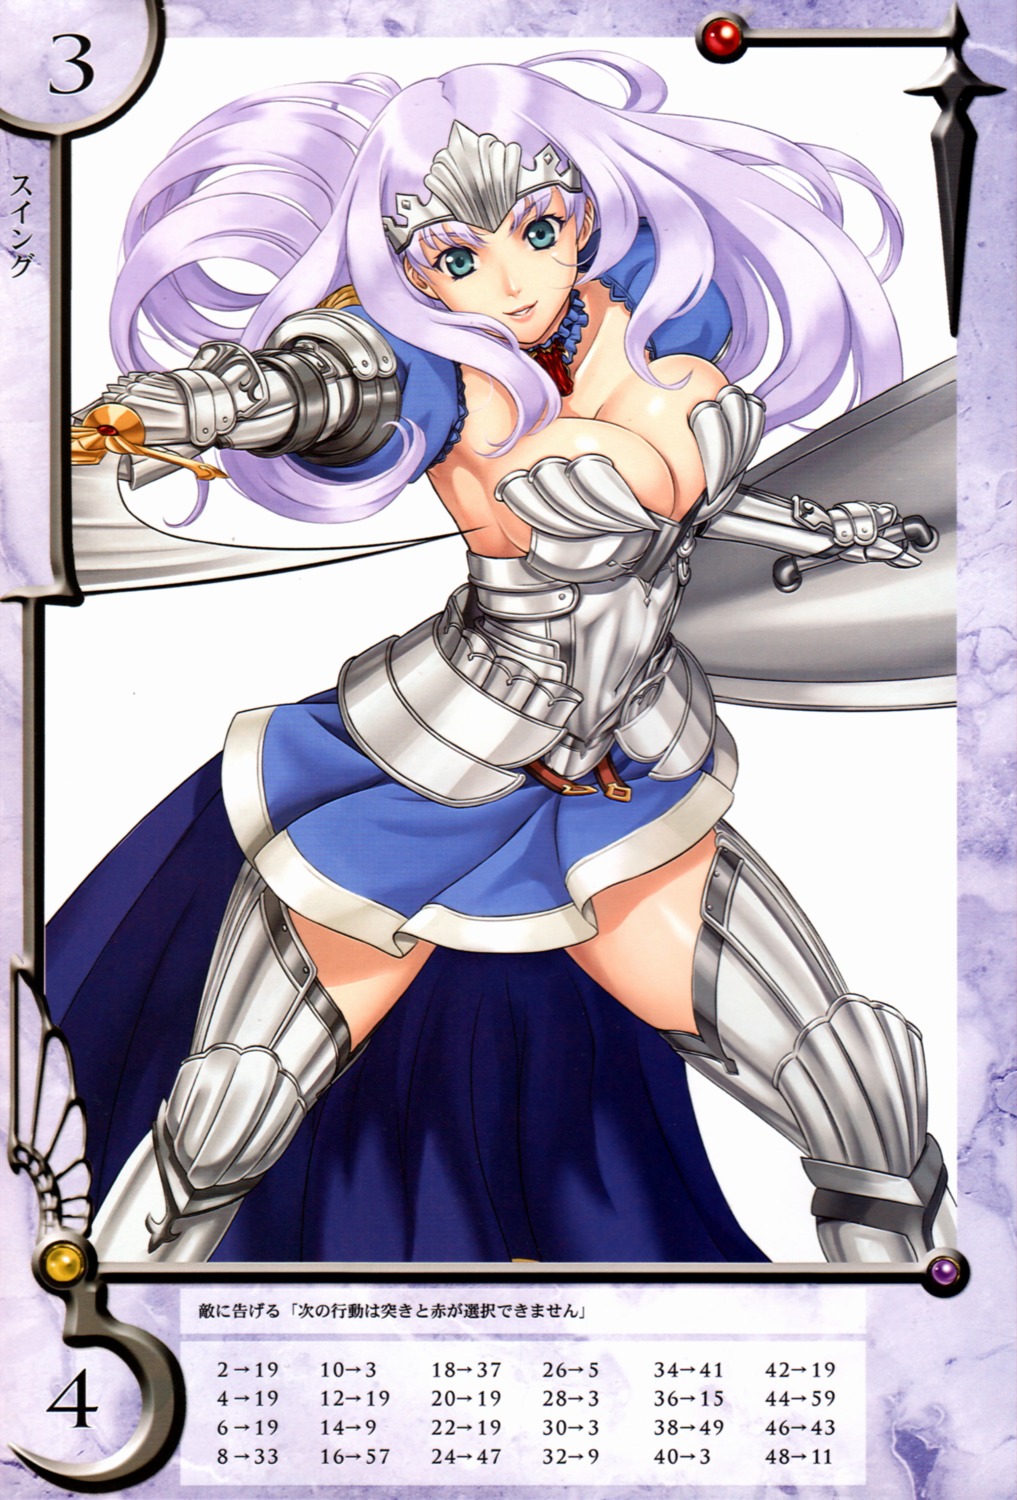 annelotte armor cleavage eiwa queen's_blade queen's_blade_rebellion thighhighs